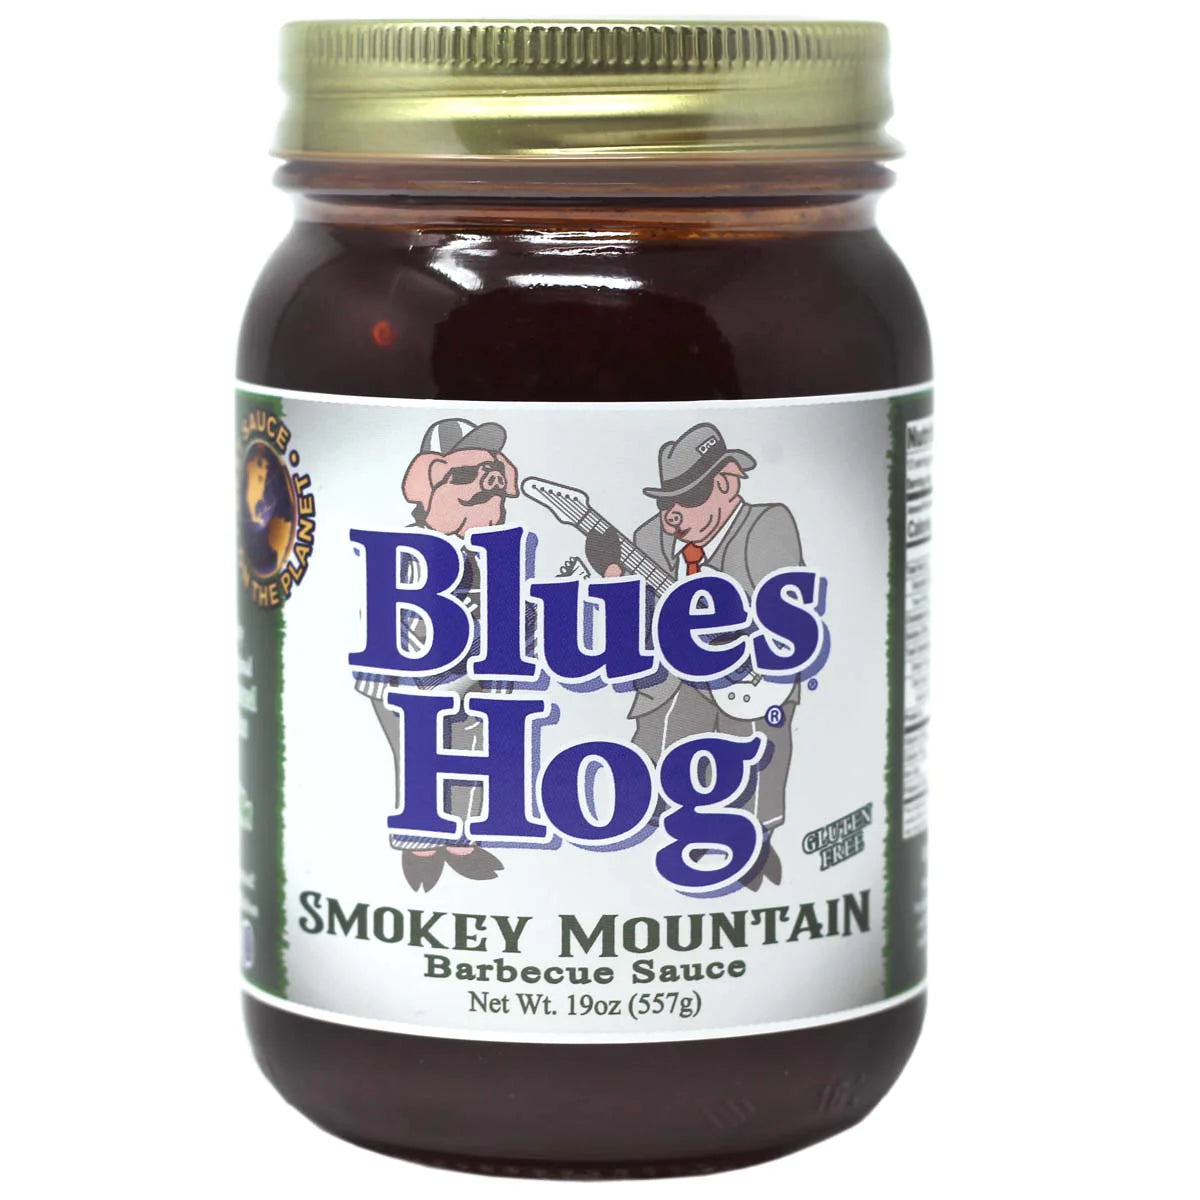 Blues Hog Smokey Mountain Barbecue Sauce